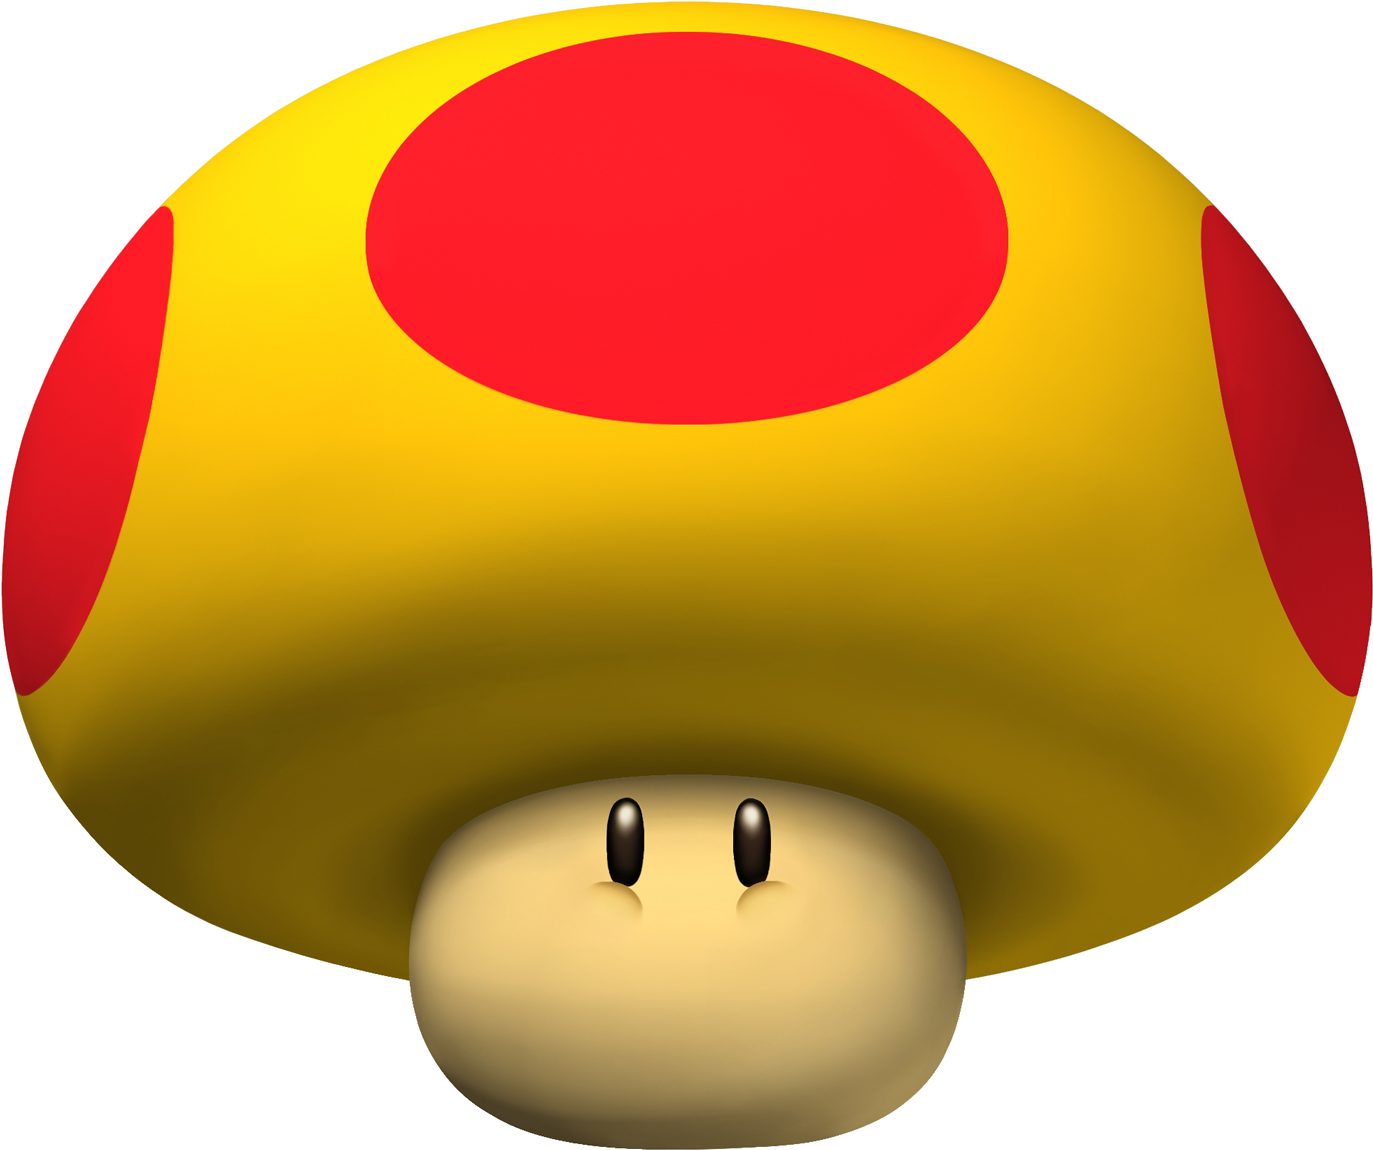 A Cartoon Mushroom With Red Dots